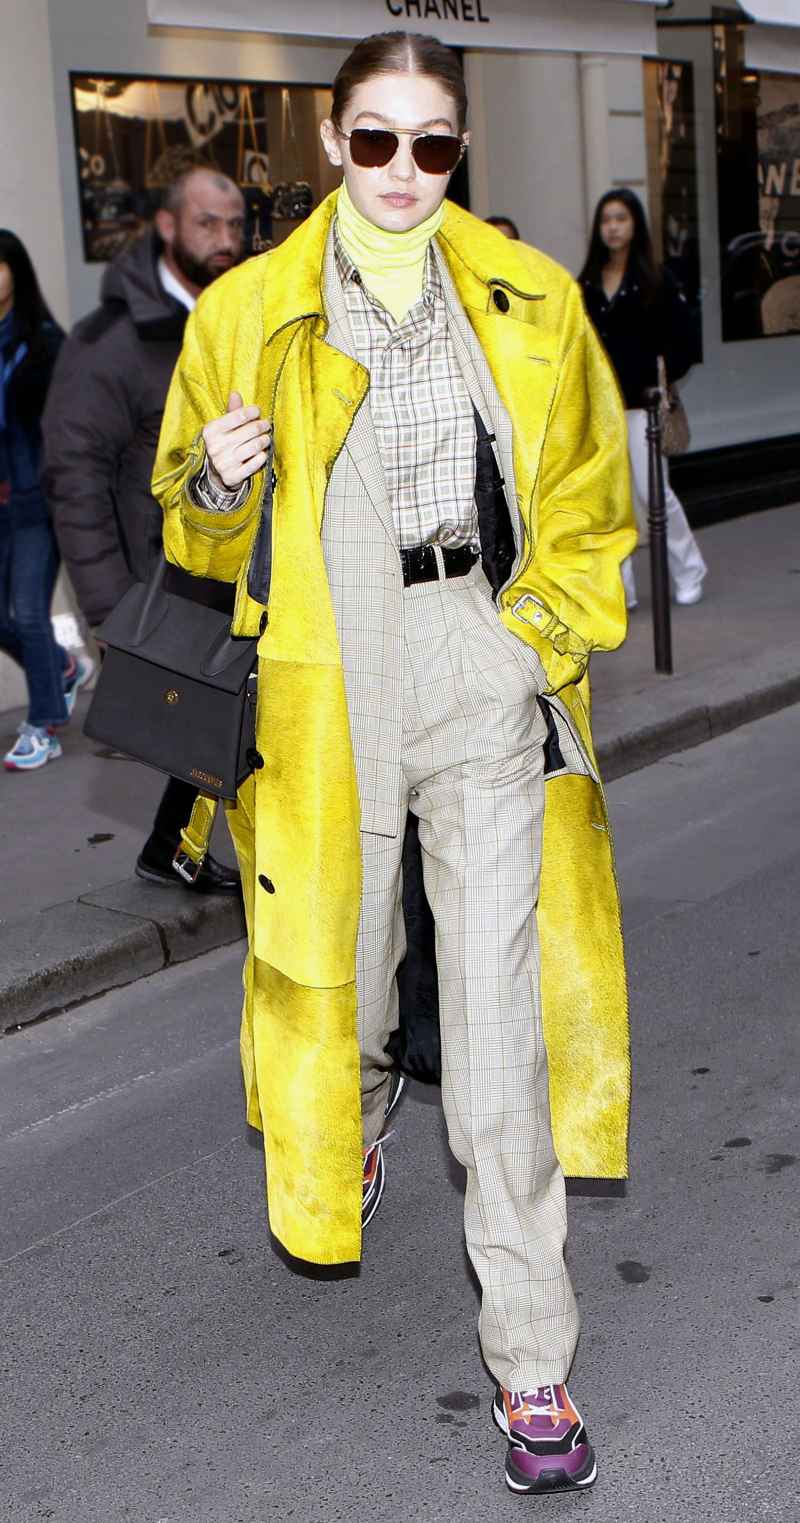 Celeb Style At Paris Fashion Week - Gigi Hadid